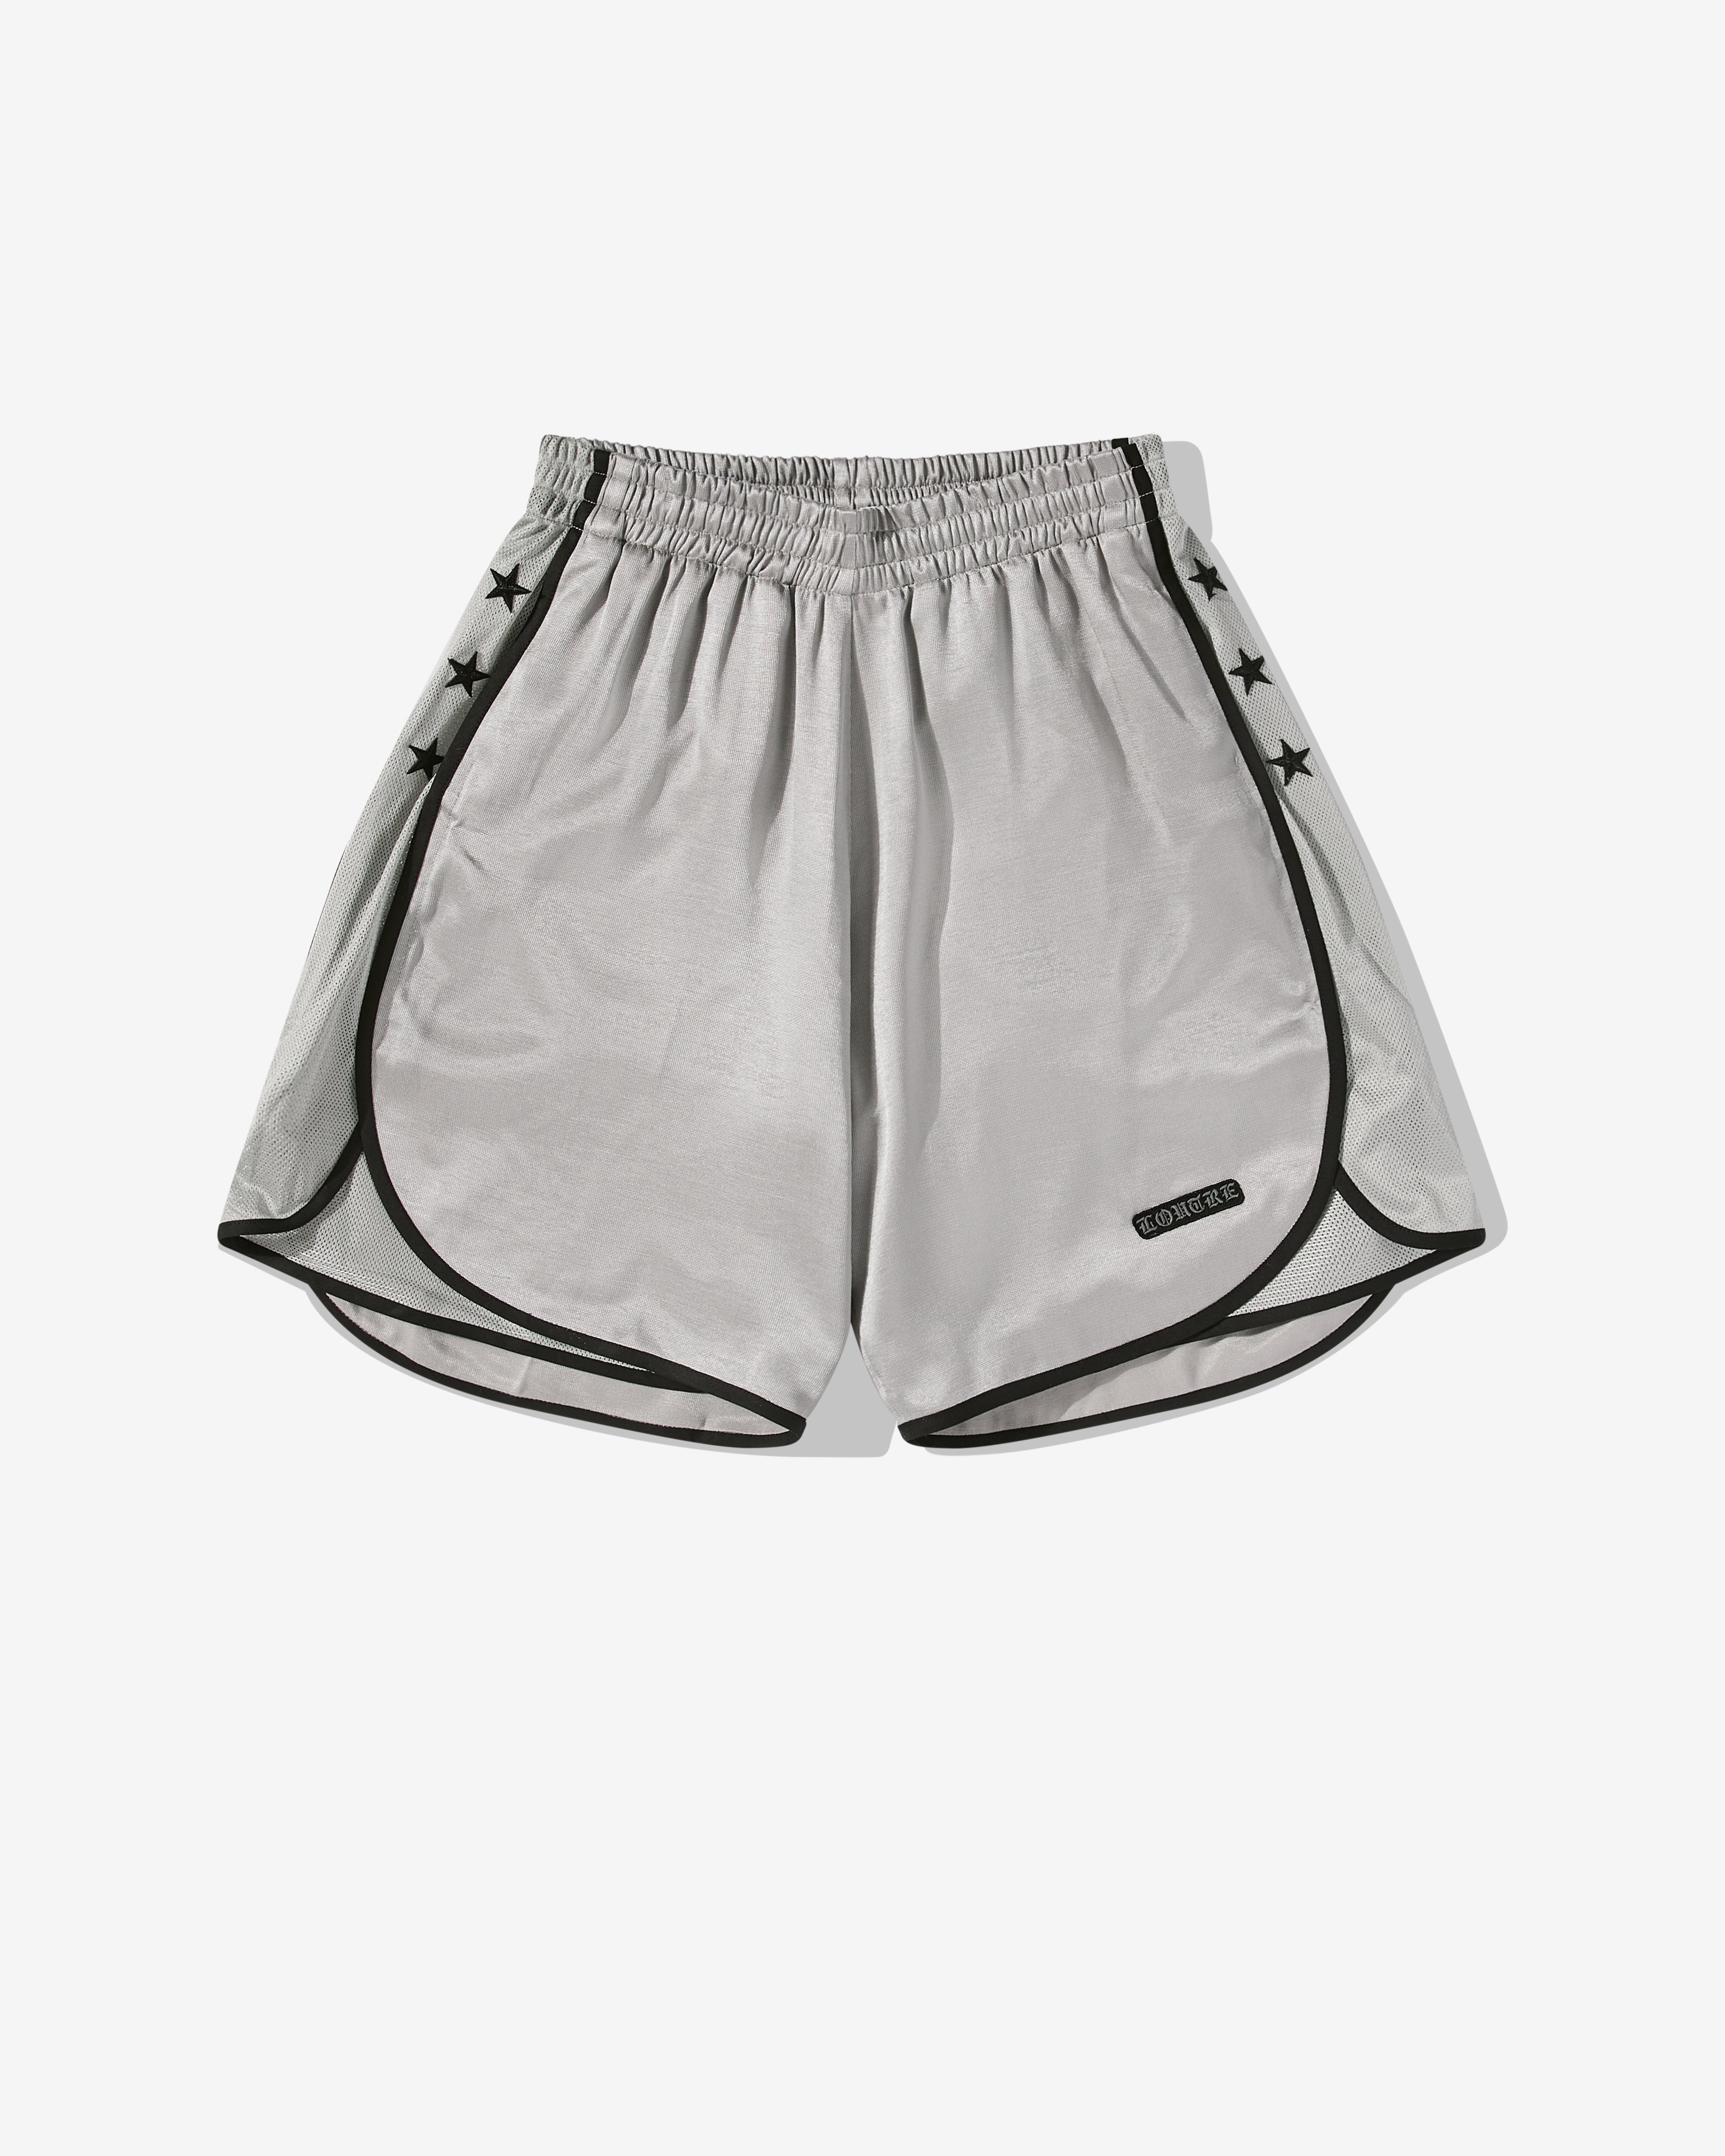 Loutre - Men's Stryder Shorts - (Silver)